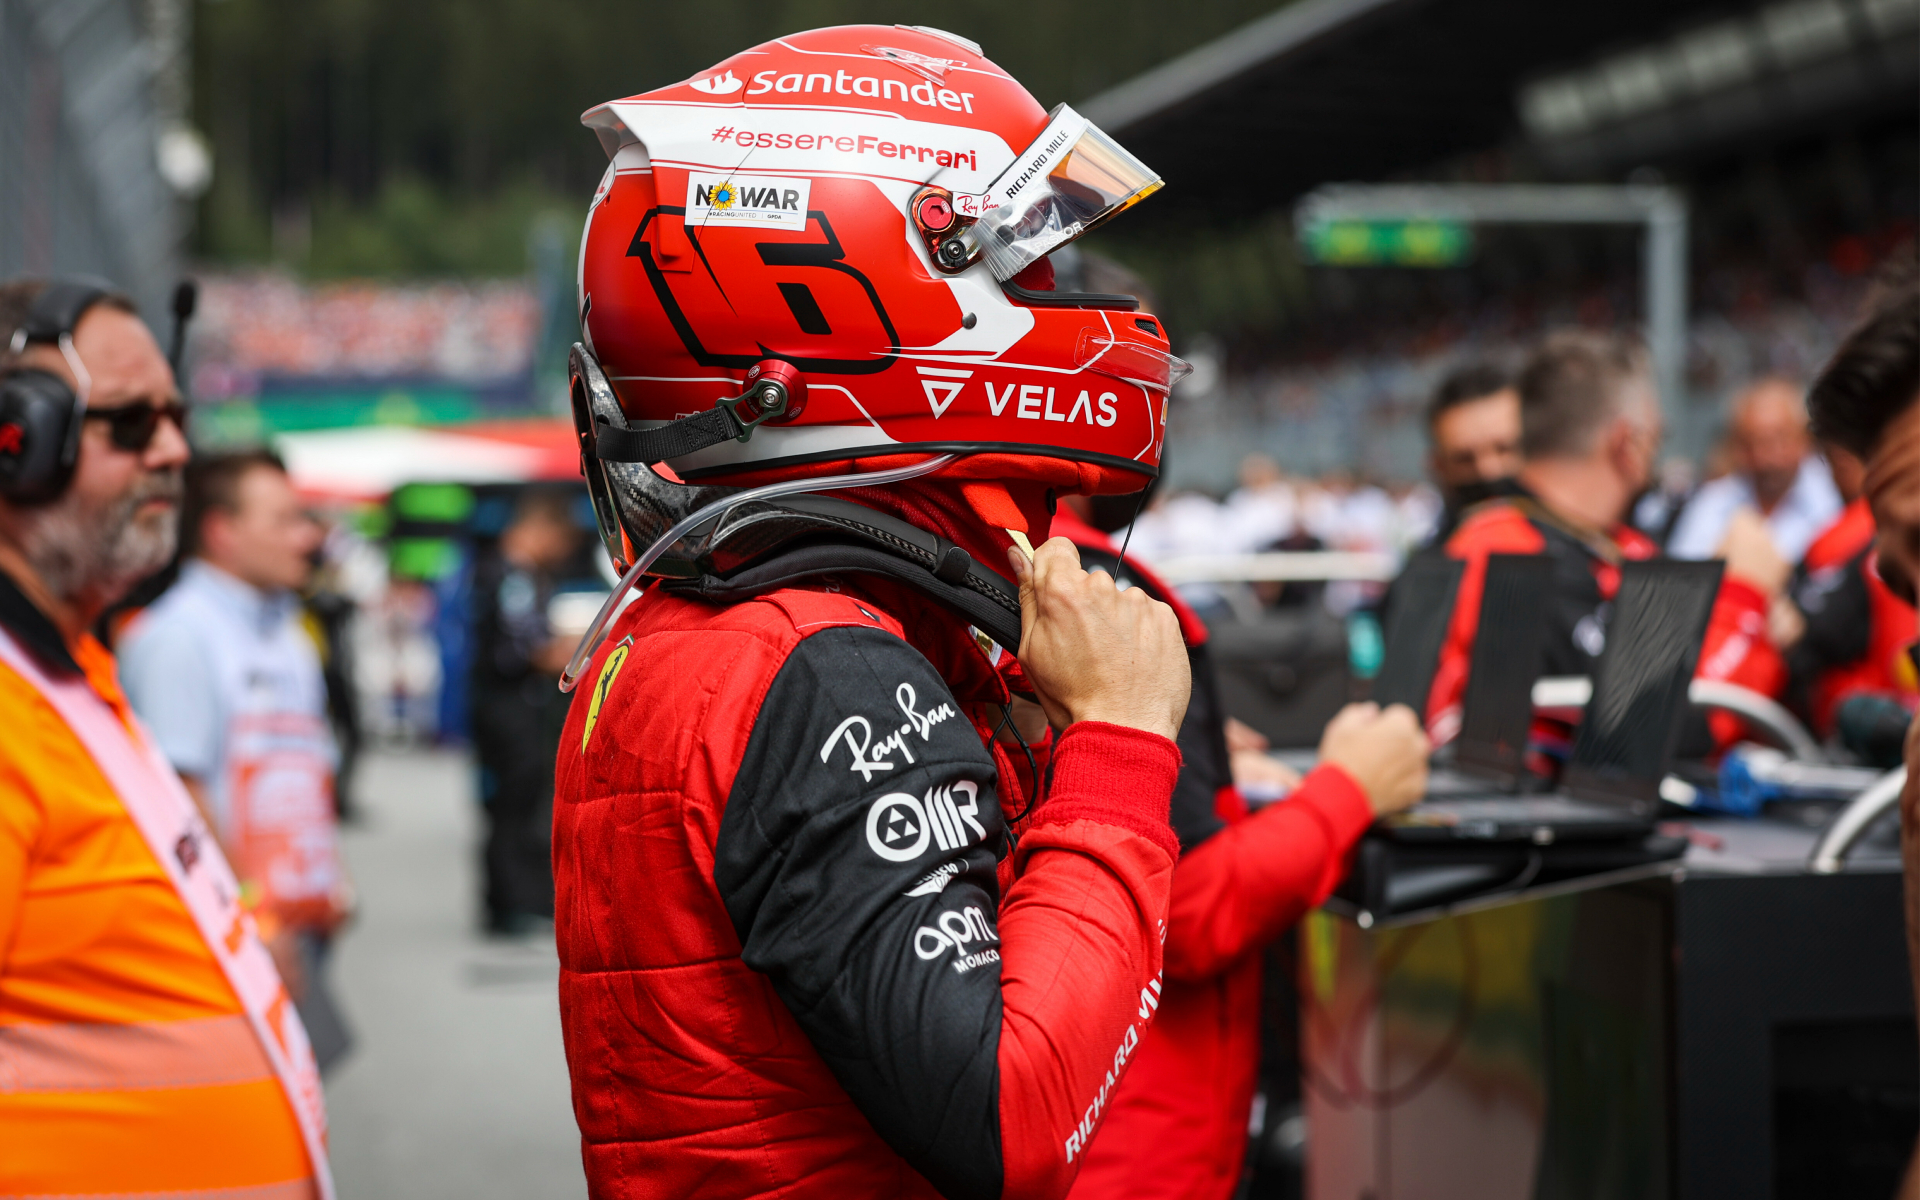 Пилот Ferrari победил на Гран-при Австрии после схода партнера по команде :: Формула-1 :: РБК Спорт